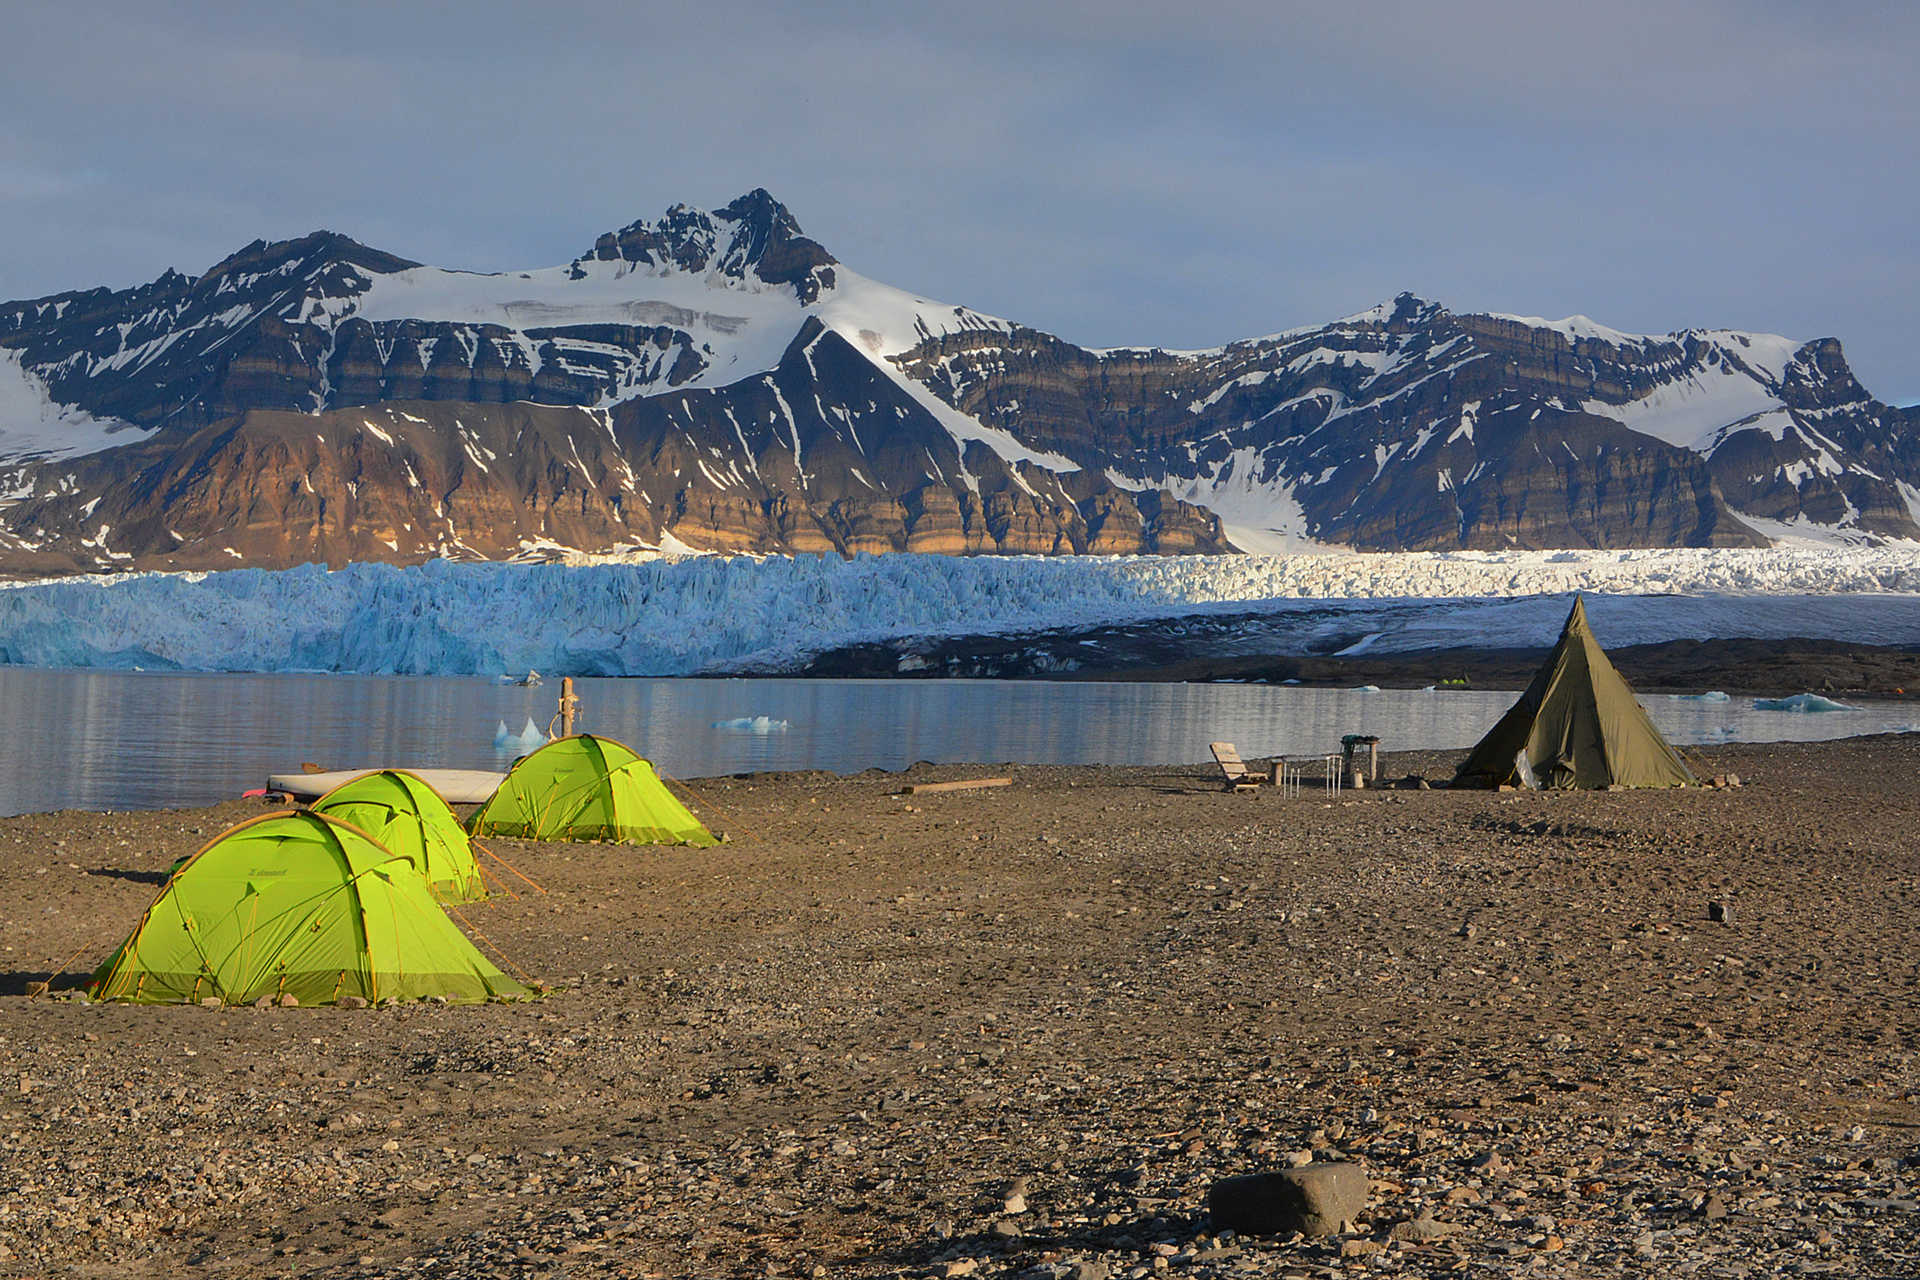 Camp au glacier Svéa, Svalbard